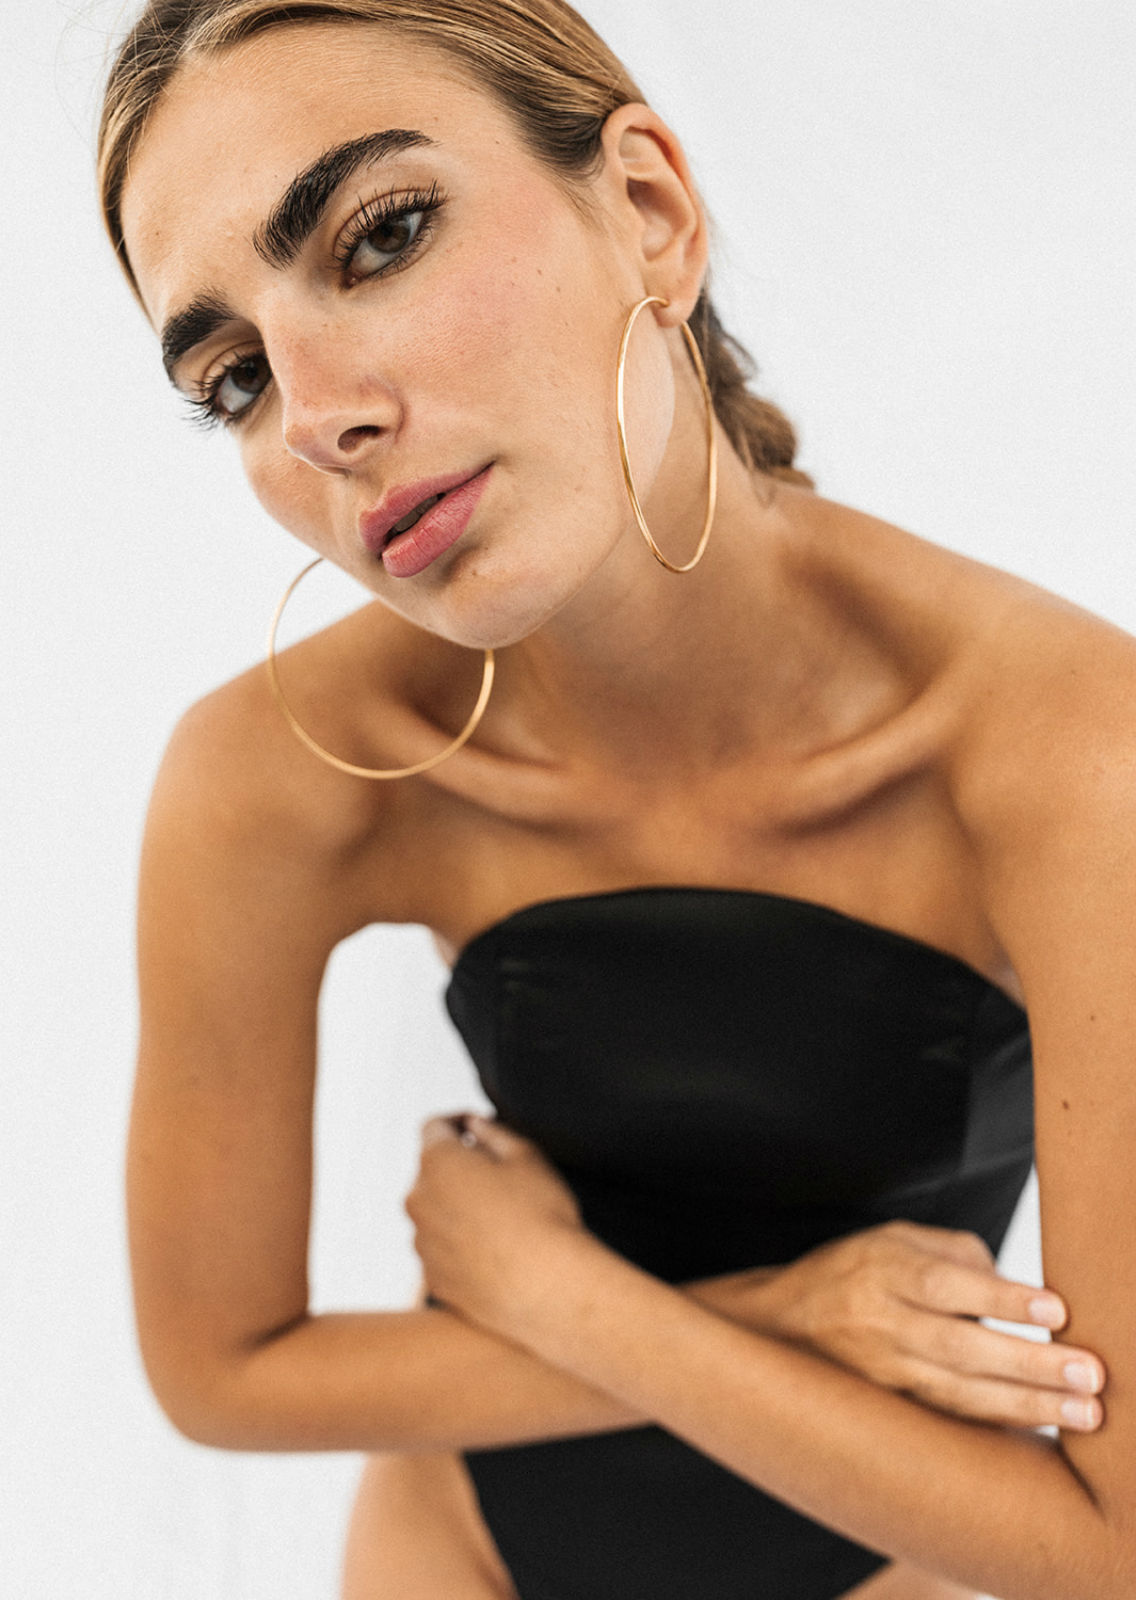 SARAH LOPEZ. Carmen Duran Model Agency.